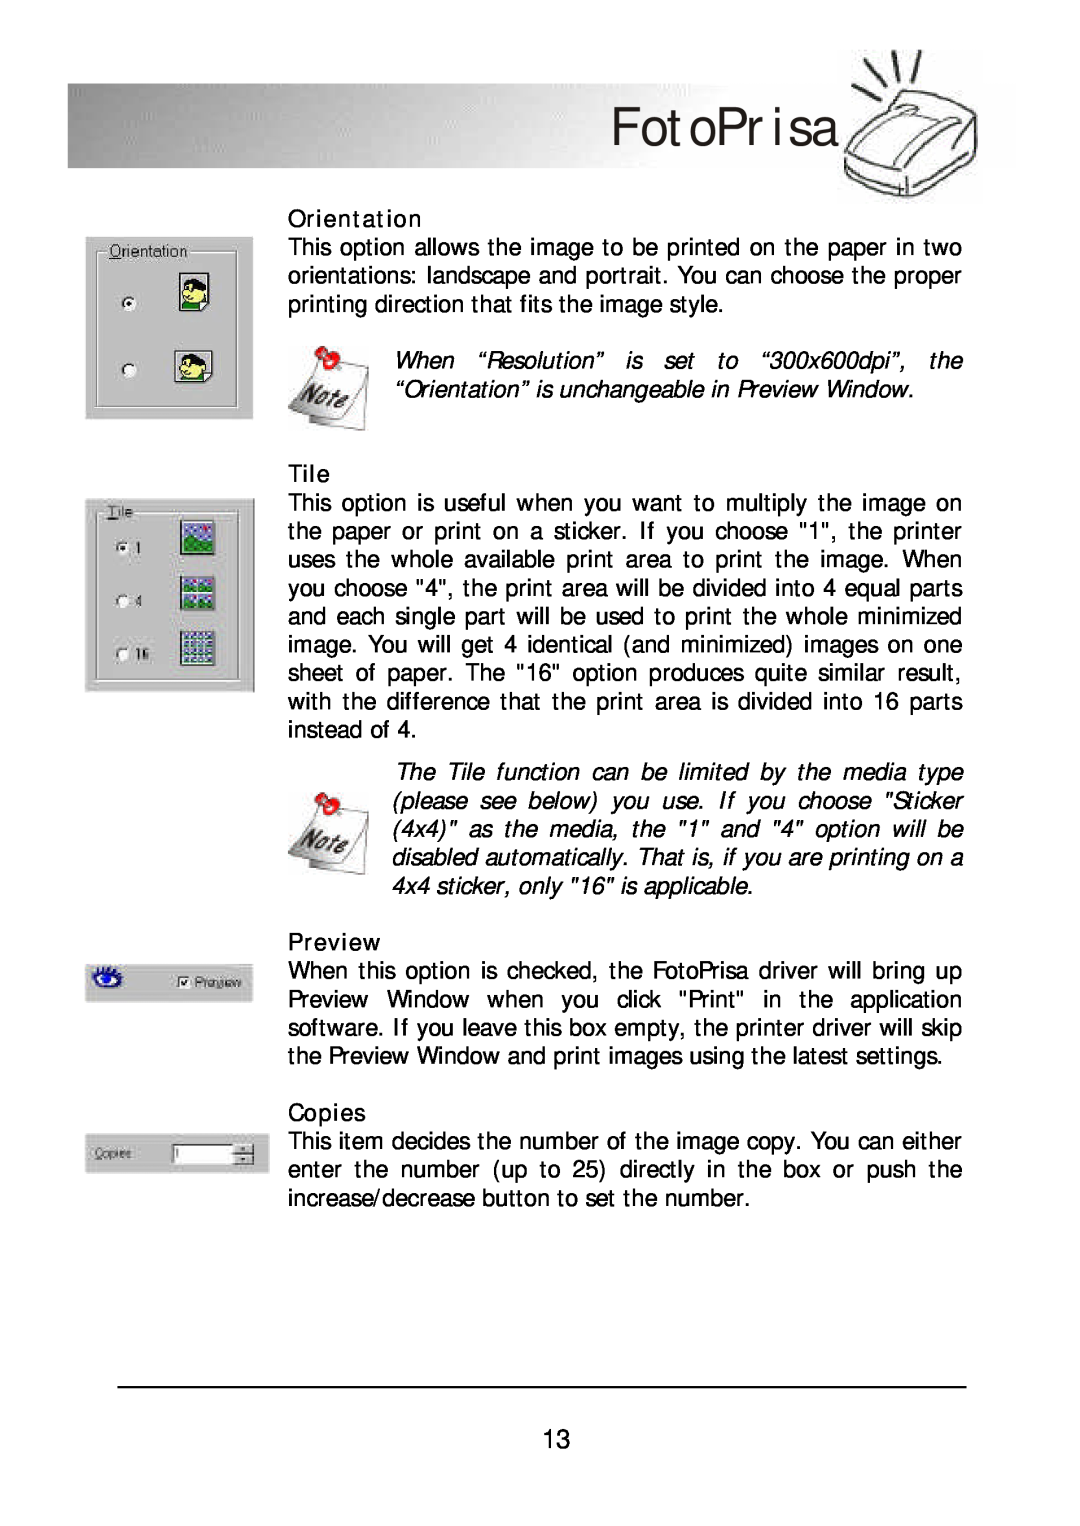 Acer 300P user manual Orientation, Tile, Preview, Copies, FotoPrisa 